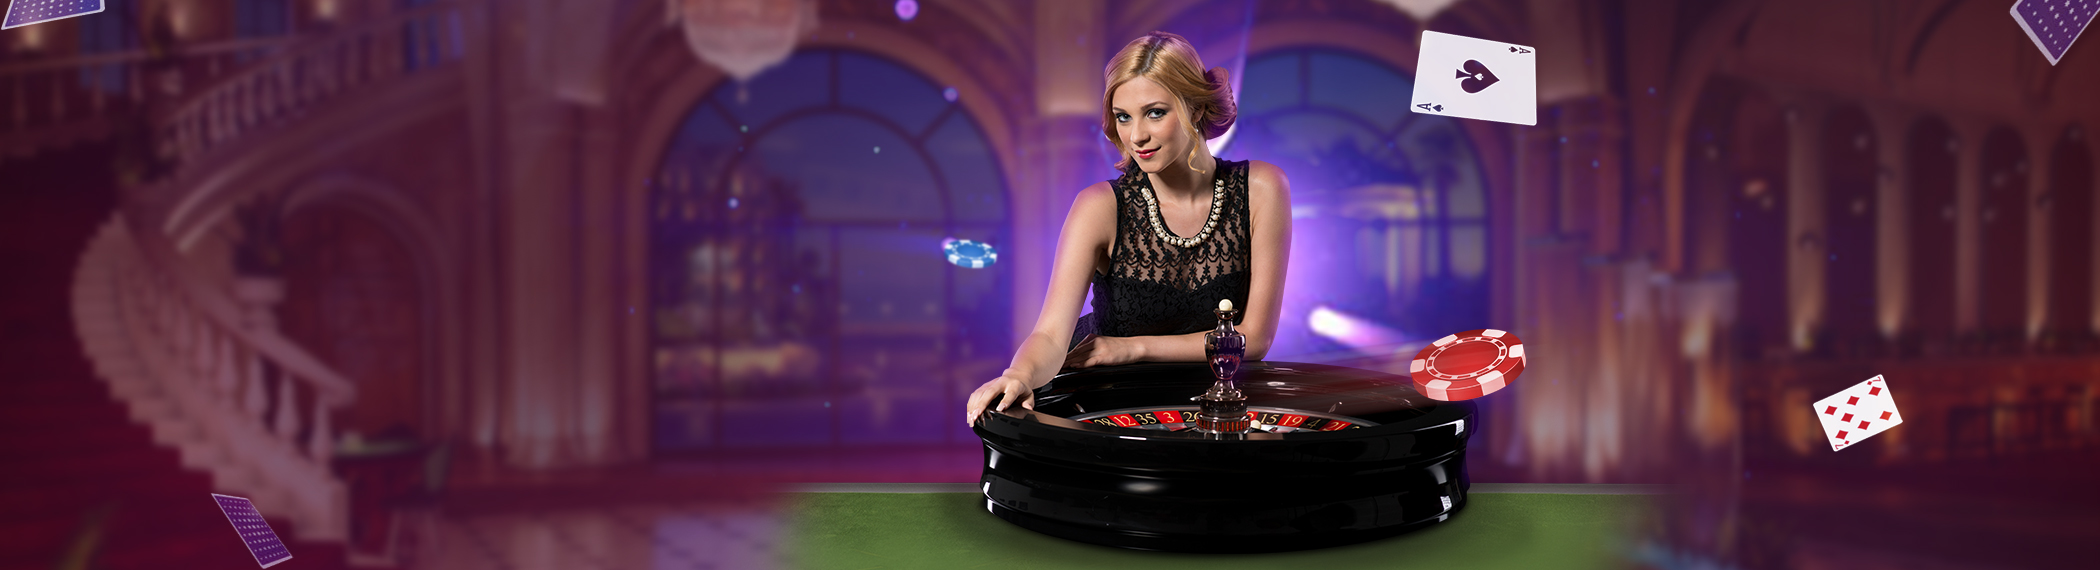 UK Casino Site | Top Slot Site Mega Deals | £800 Welcome Offers